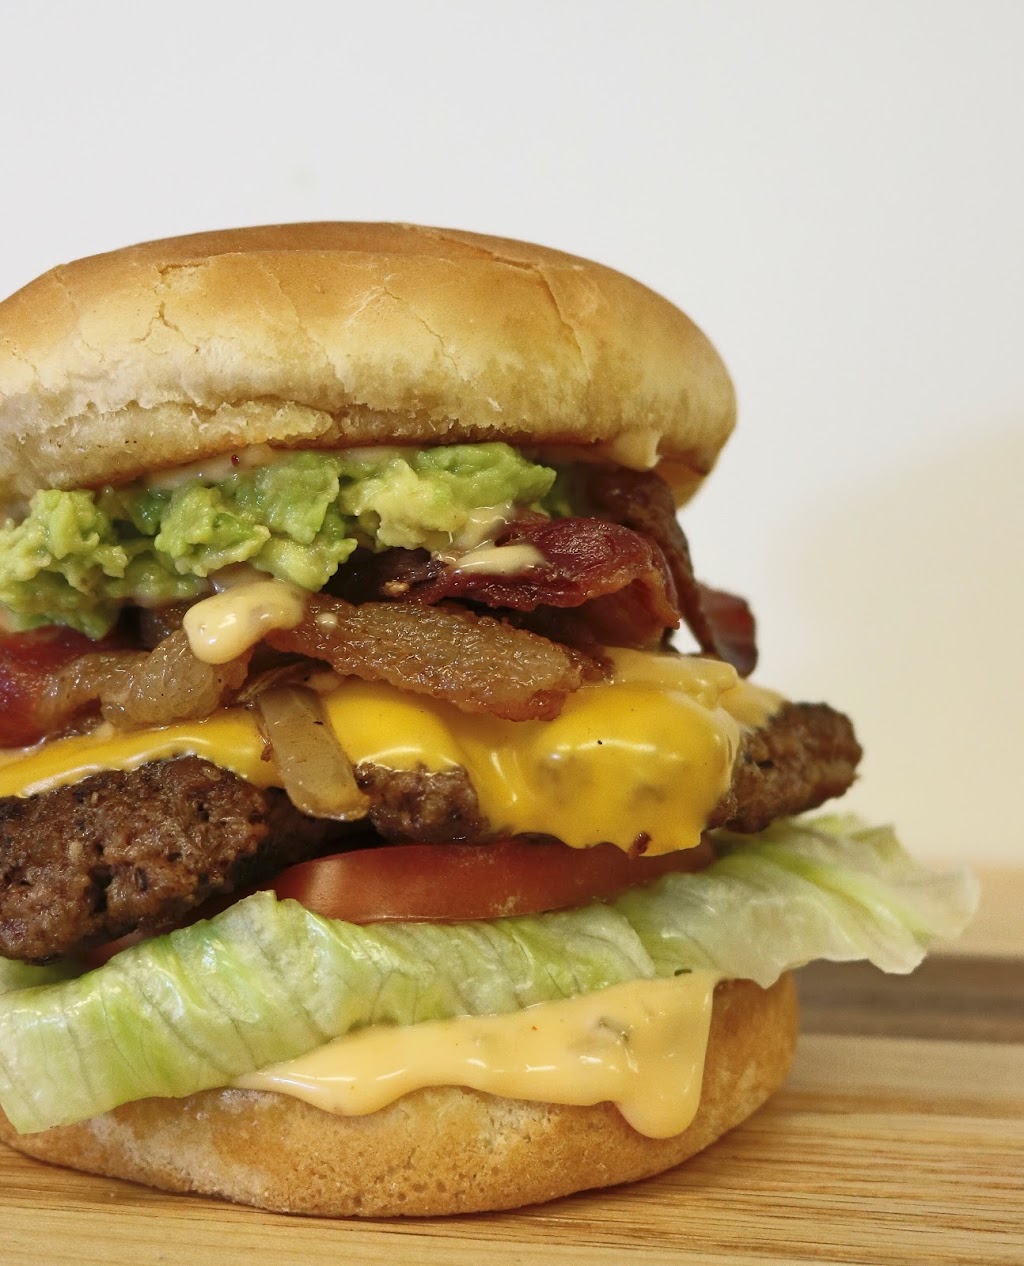 Sespe Burger | 8252 Market St, Boardman, OH 44512, USA | Phone: (234) 254-0014